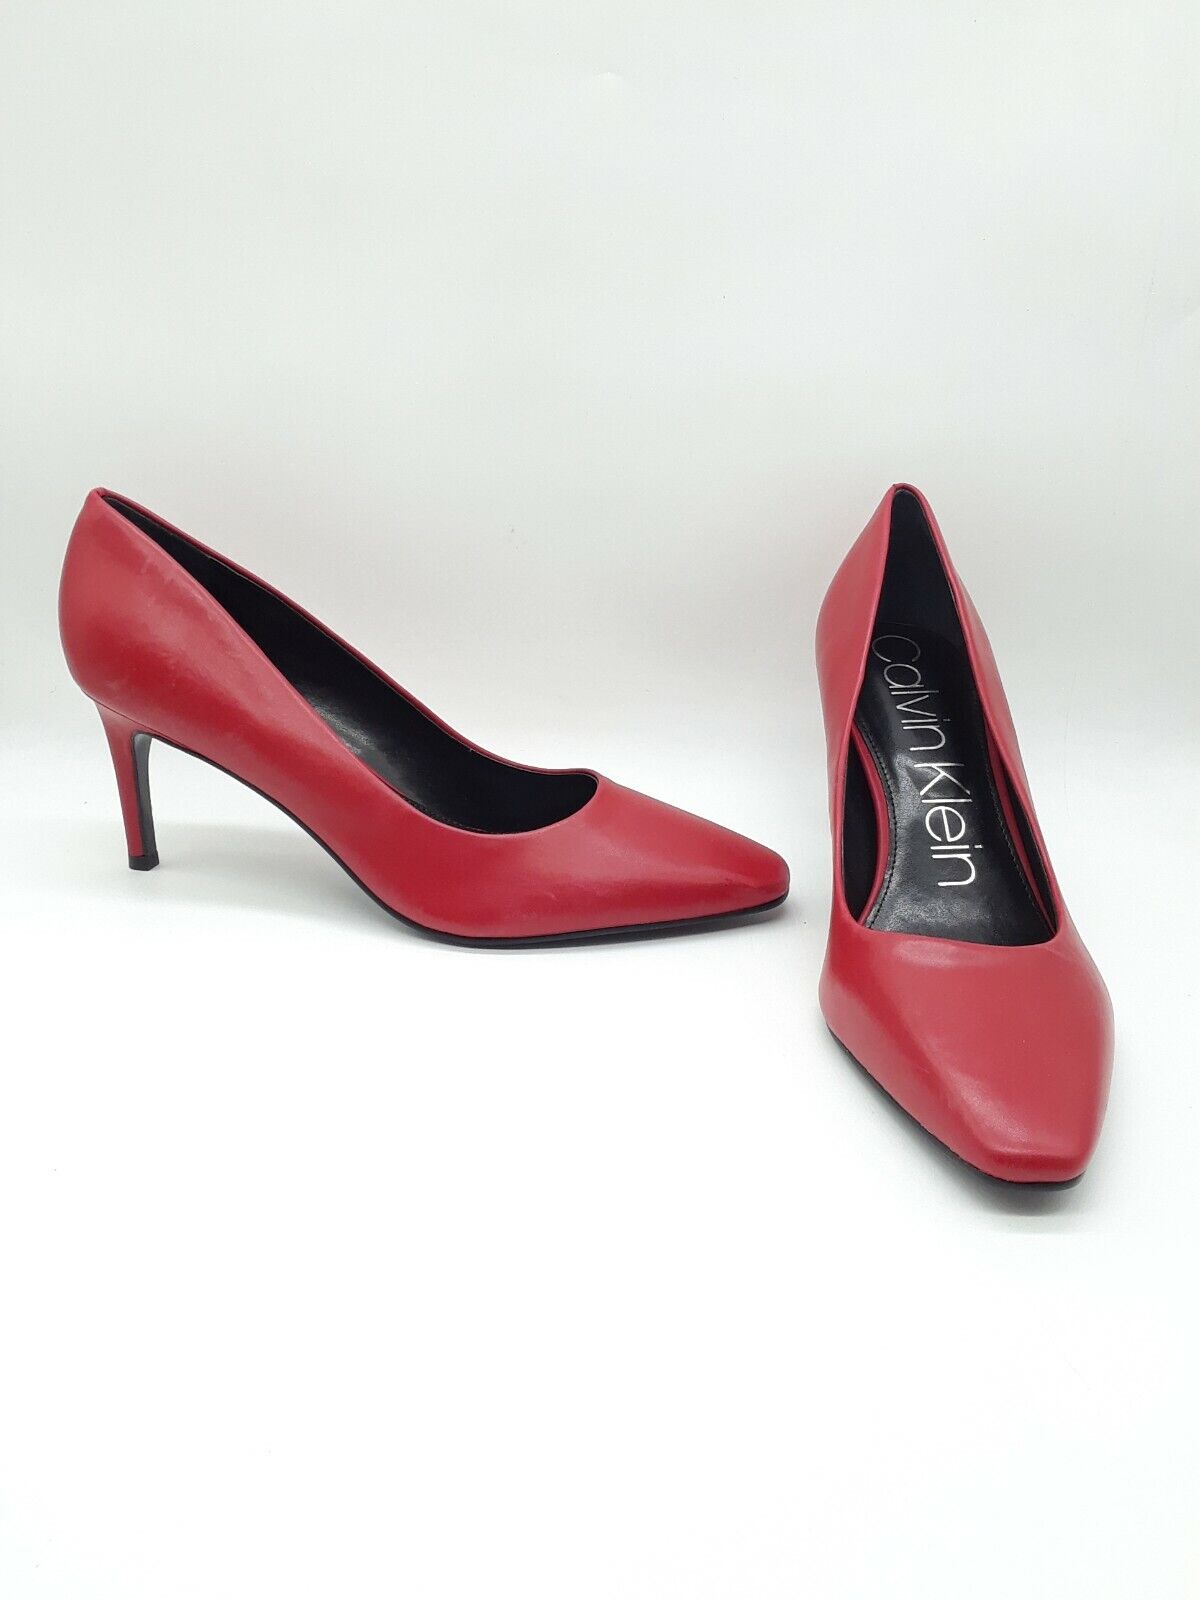 Calvin Klein Callia Women Shoes Dress Pumps Dark Red Leather Sz 10 M  195182420378 | eBay